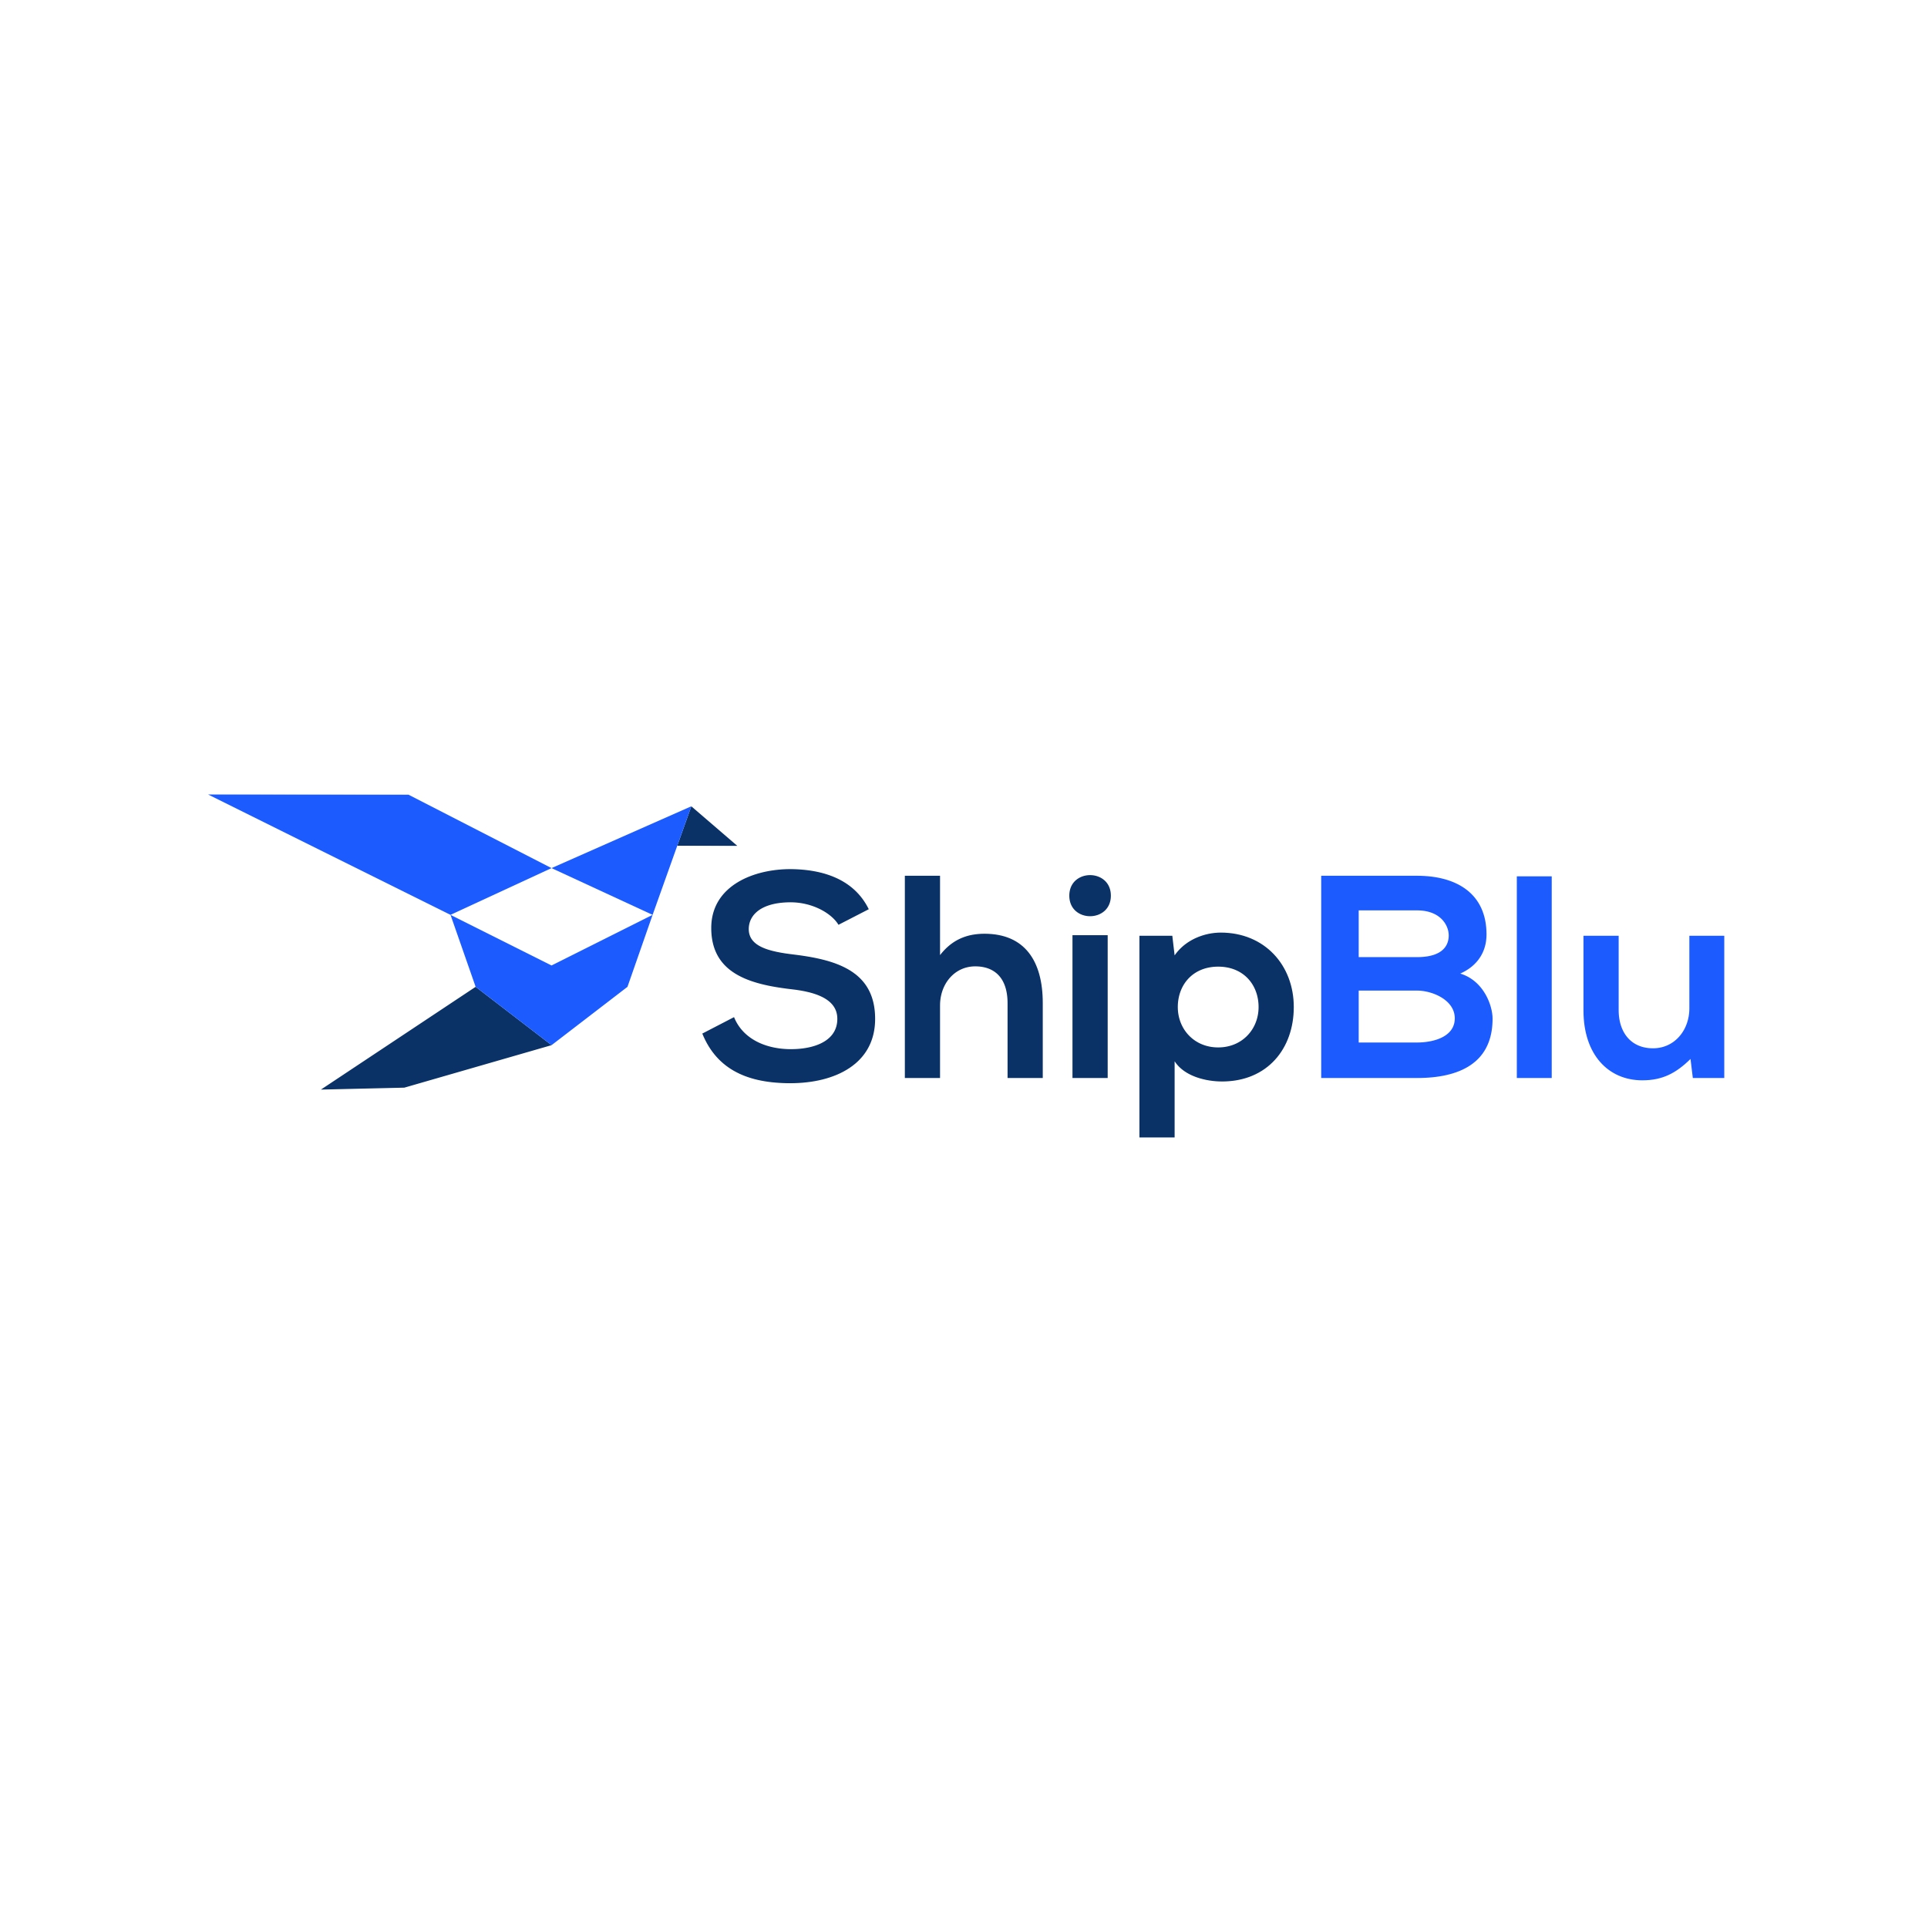 ShipBlu Nama Ventures Venture Capital Startups Egypt